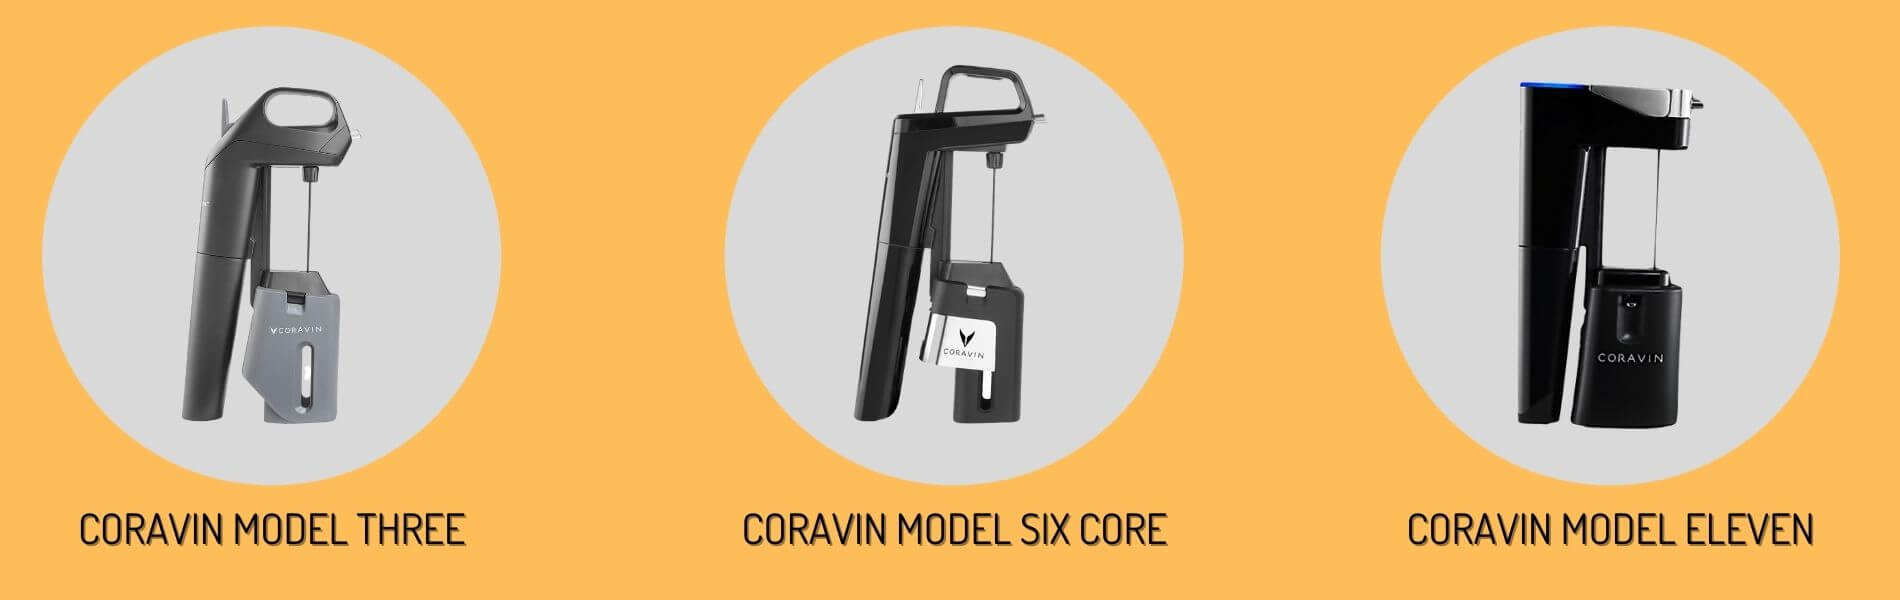 Coravin Modelle